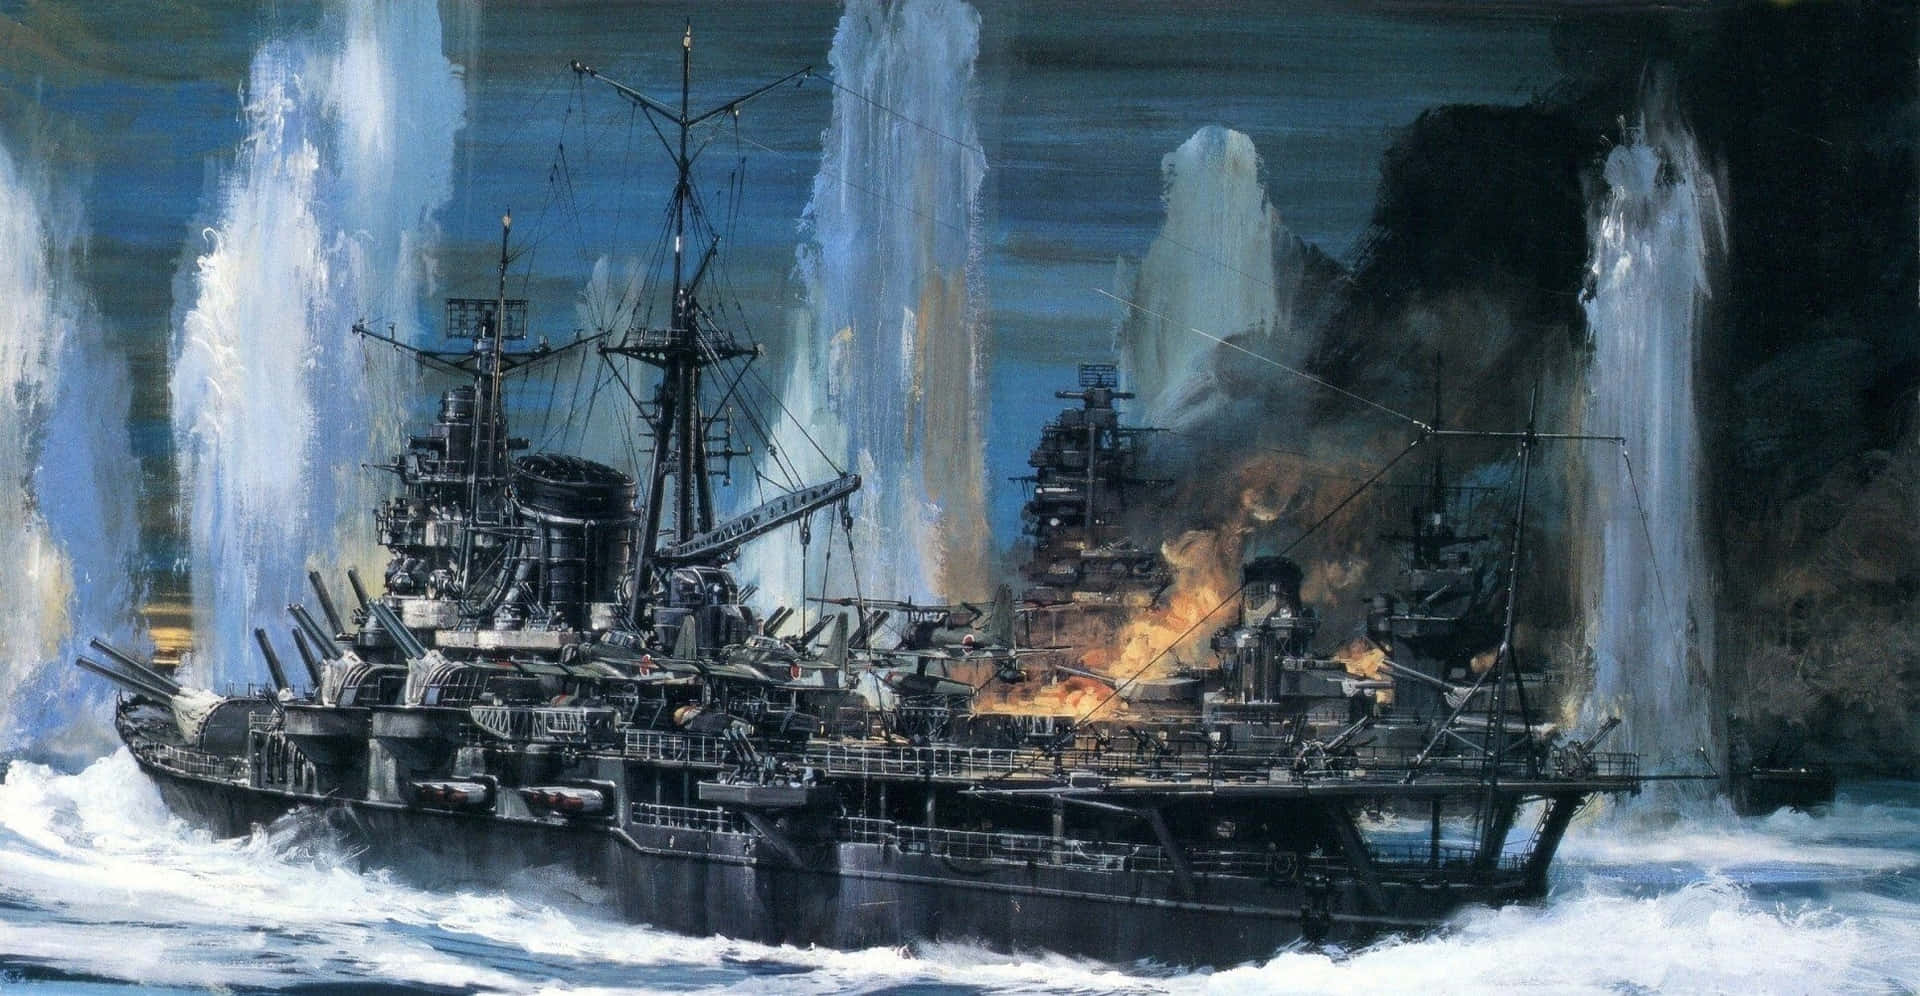 "An iconic battleship at sea"